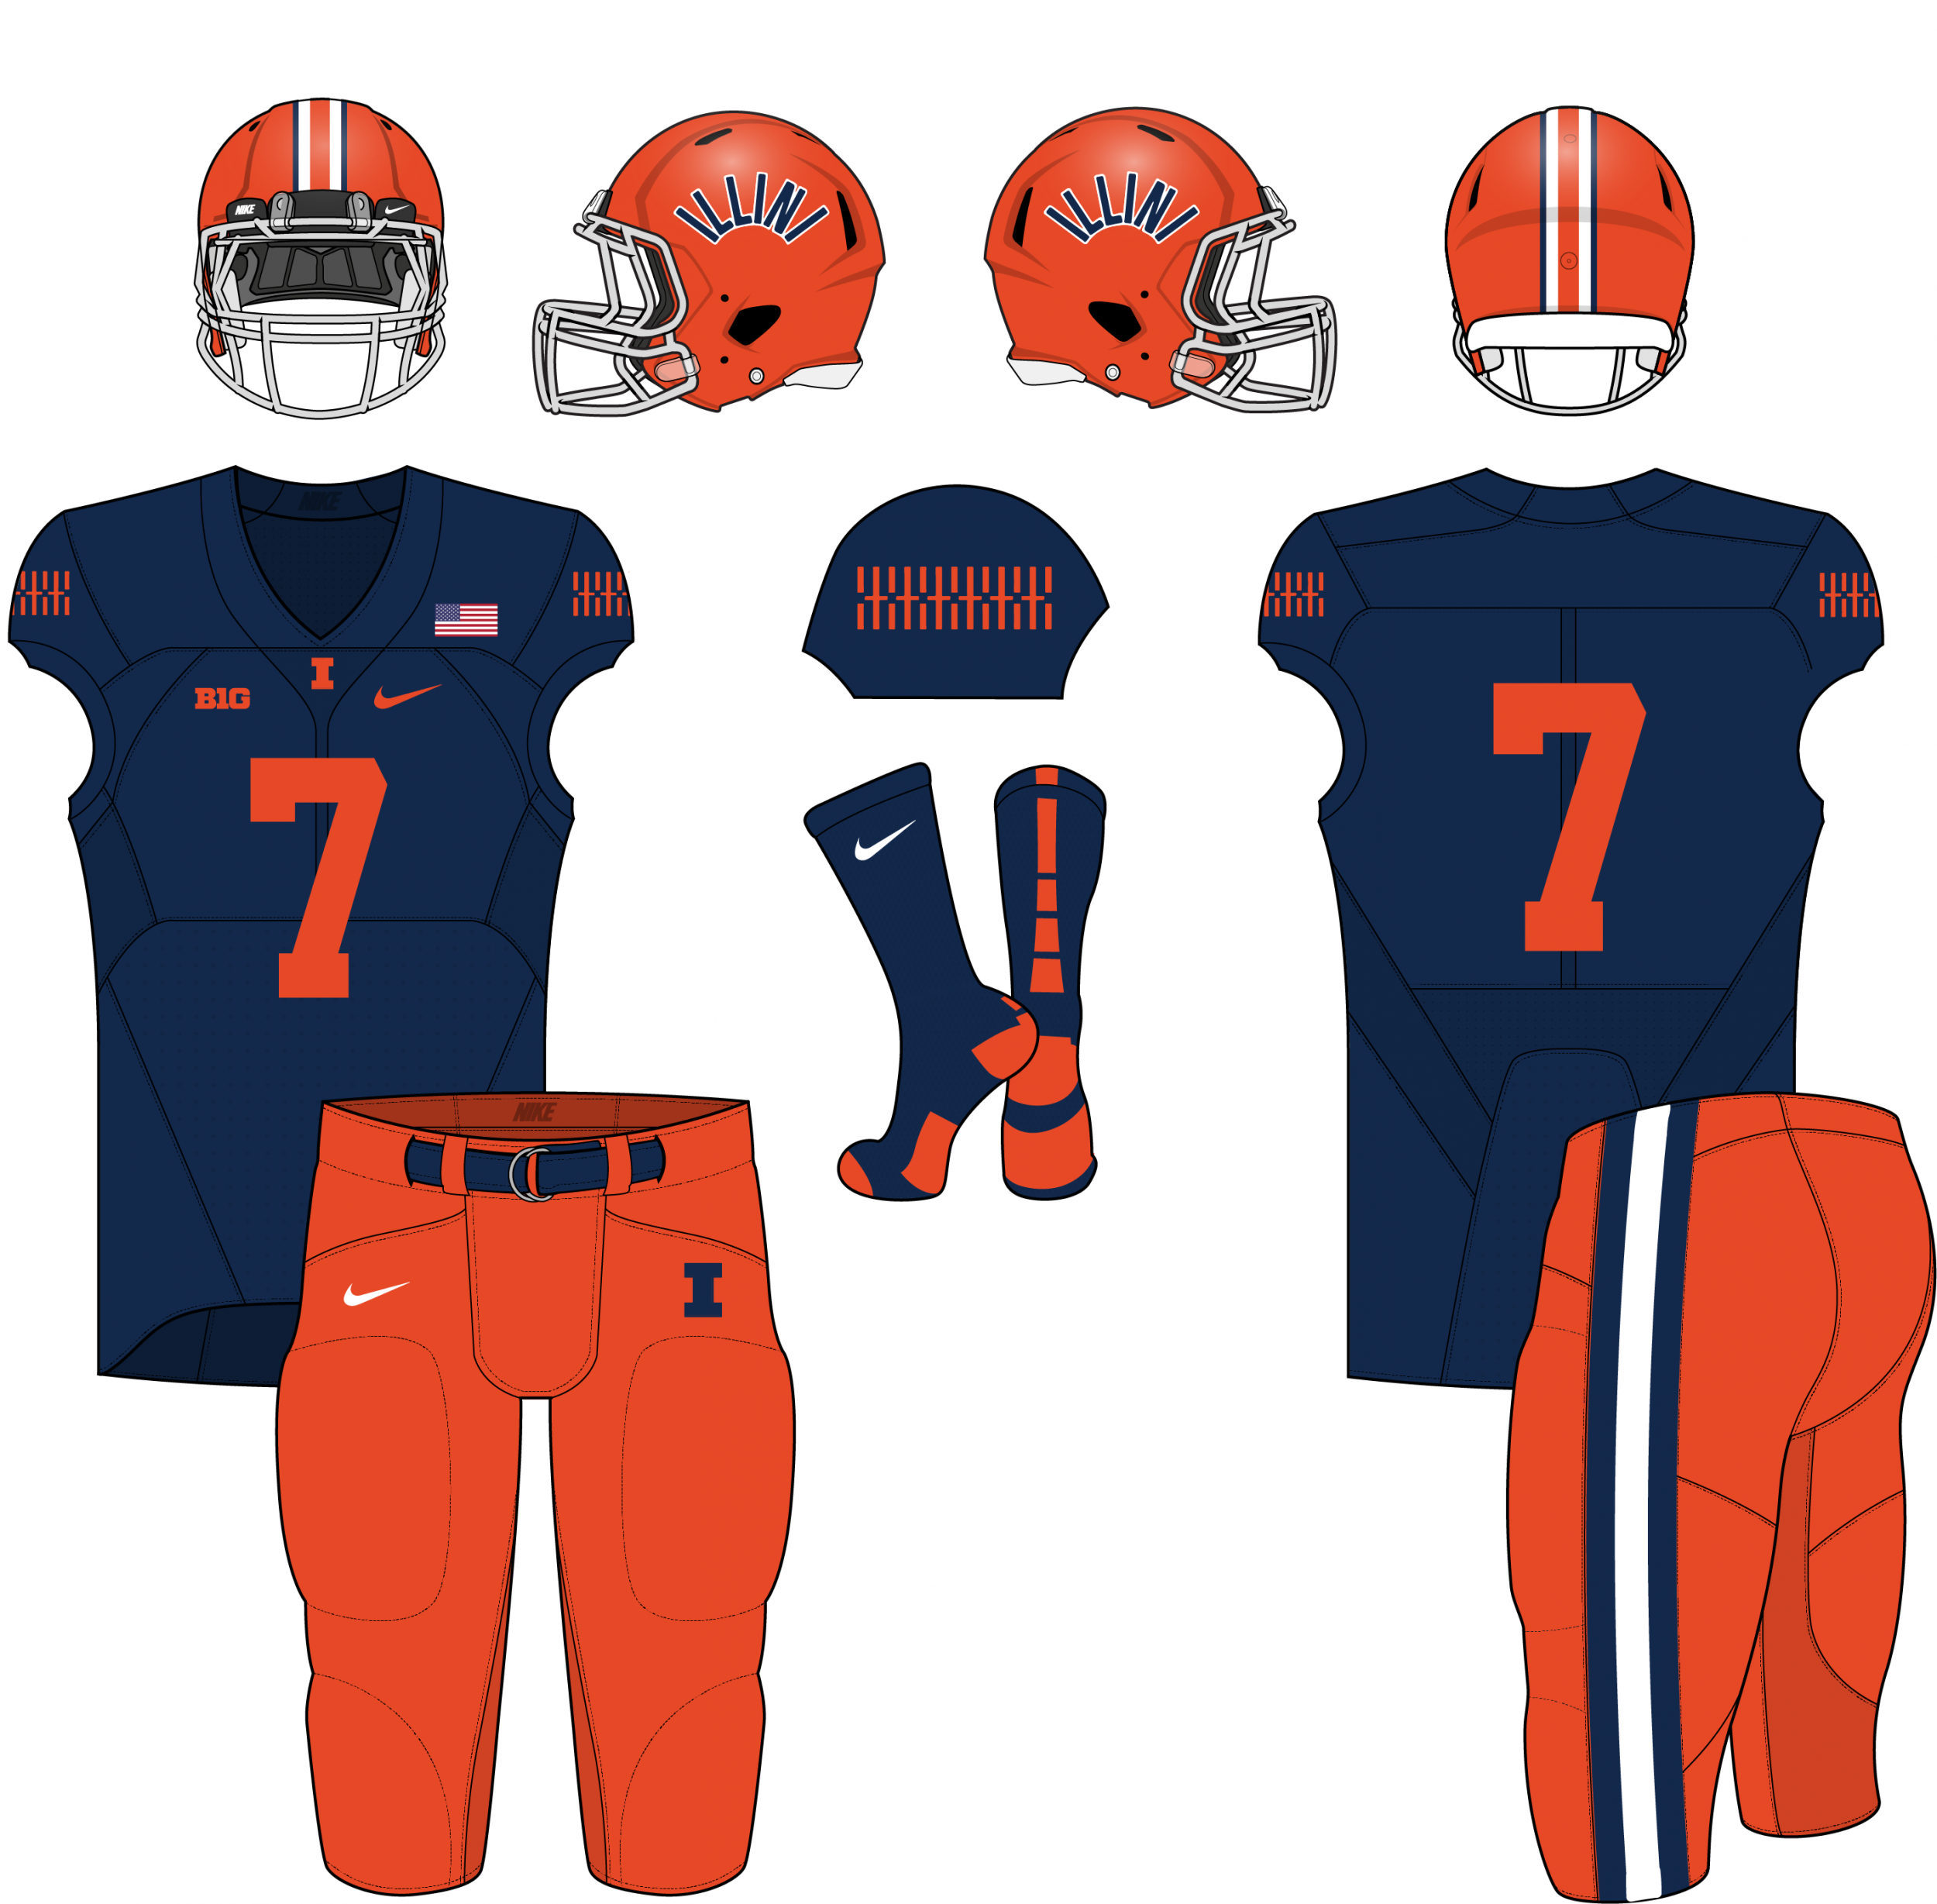 Fighting Illini Football unveils new uniform designs